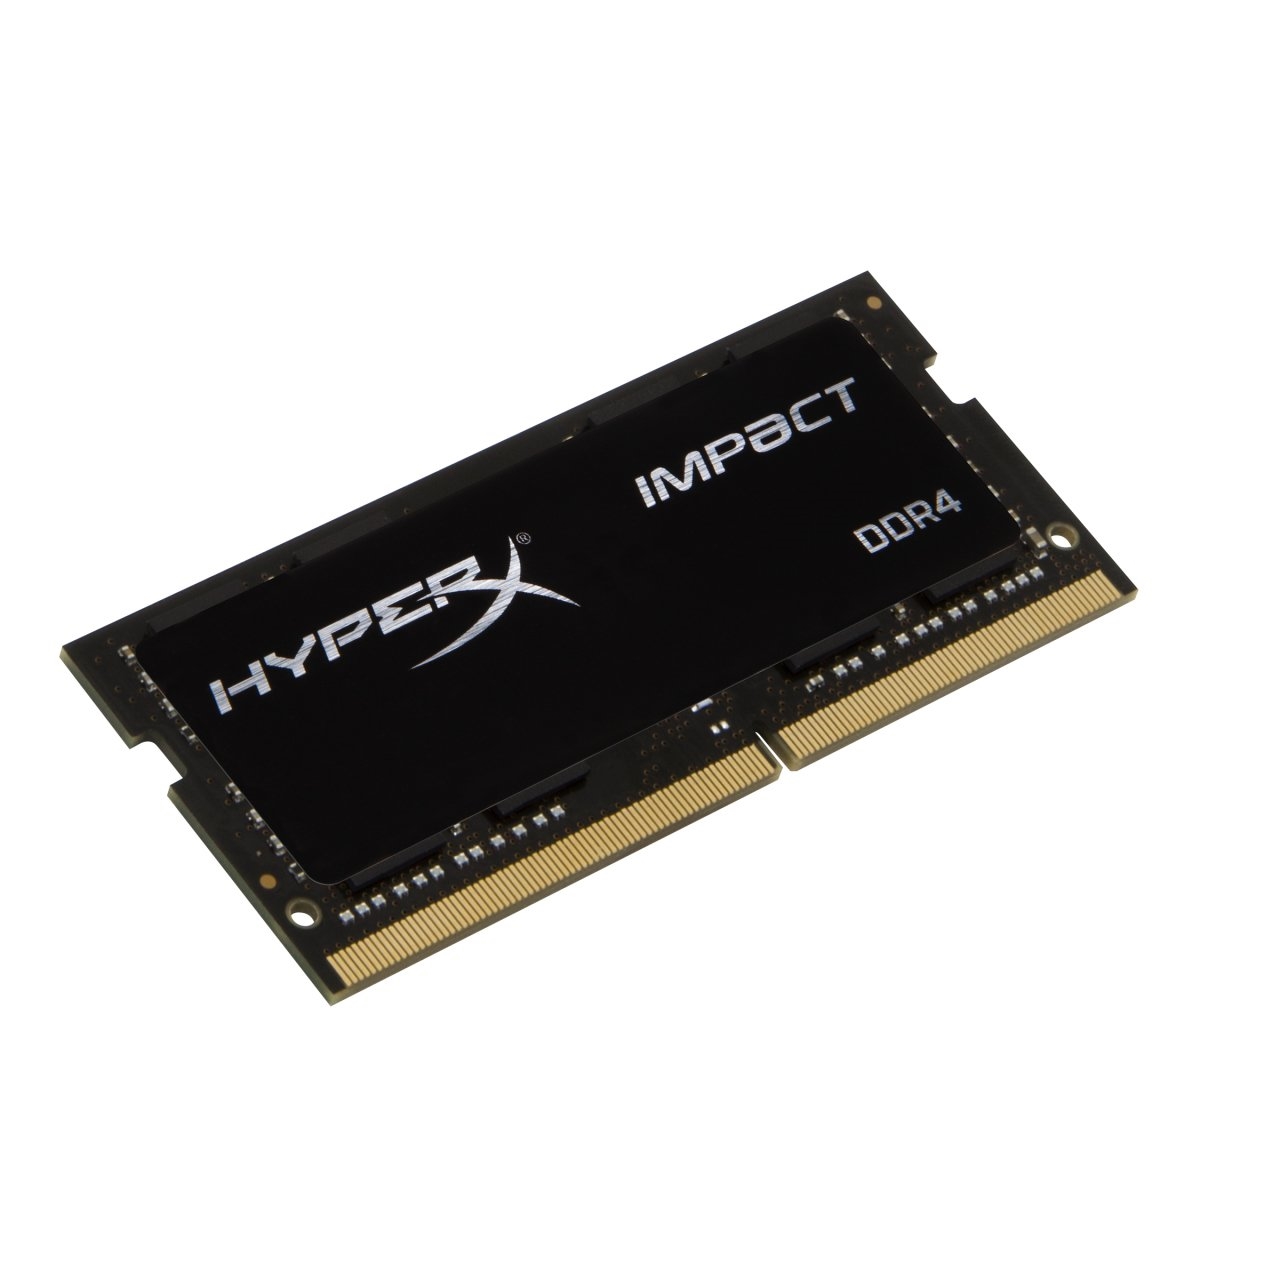 KINGSTON HYPERX 16GB 2400MHz DDR4 HyperX D4 SODIMM HX424S14IB/16